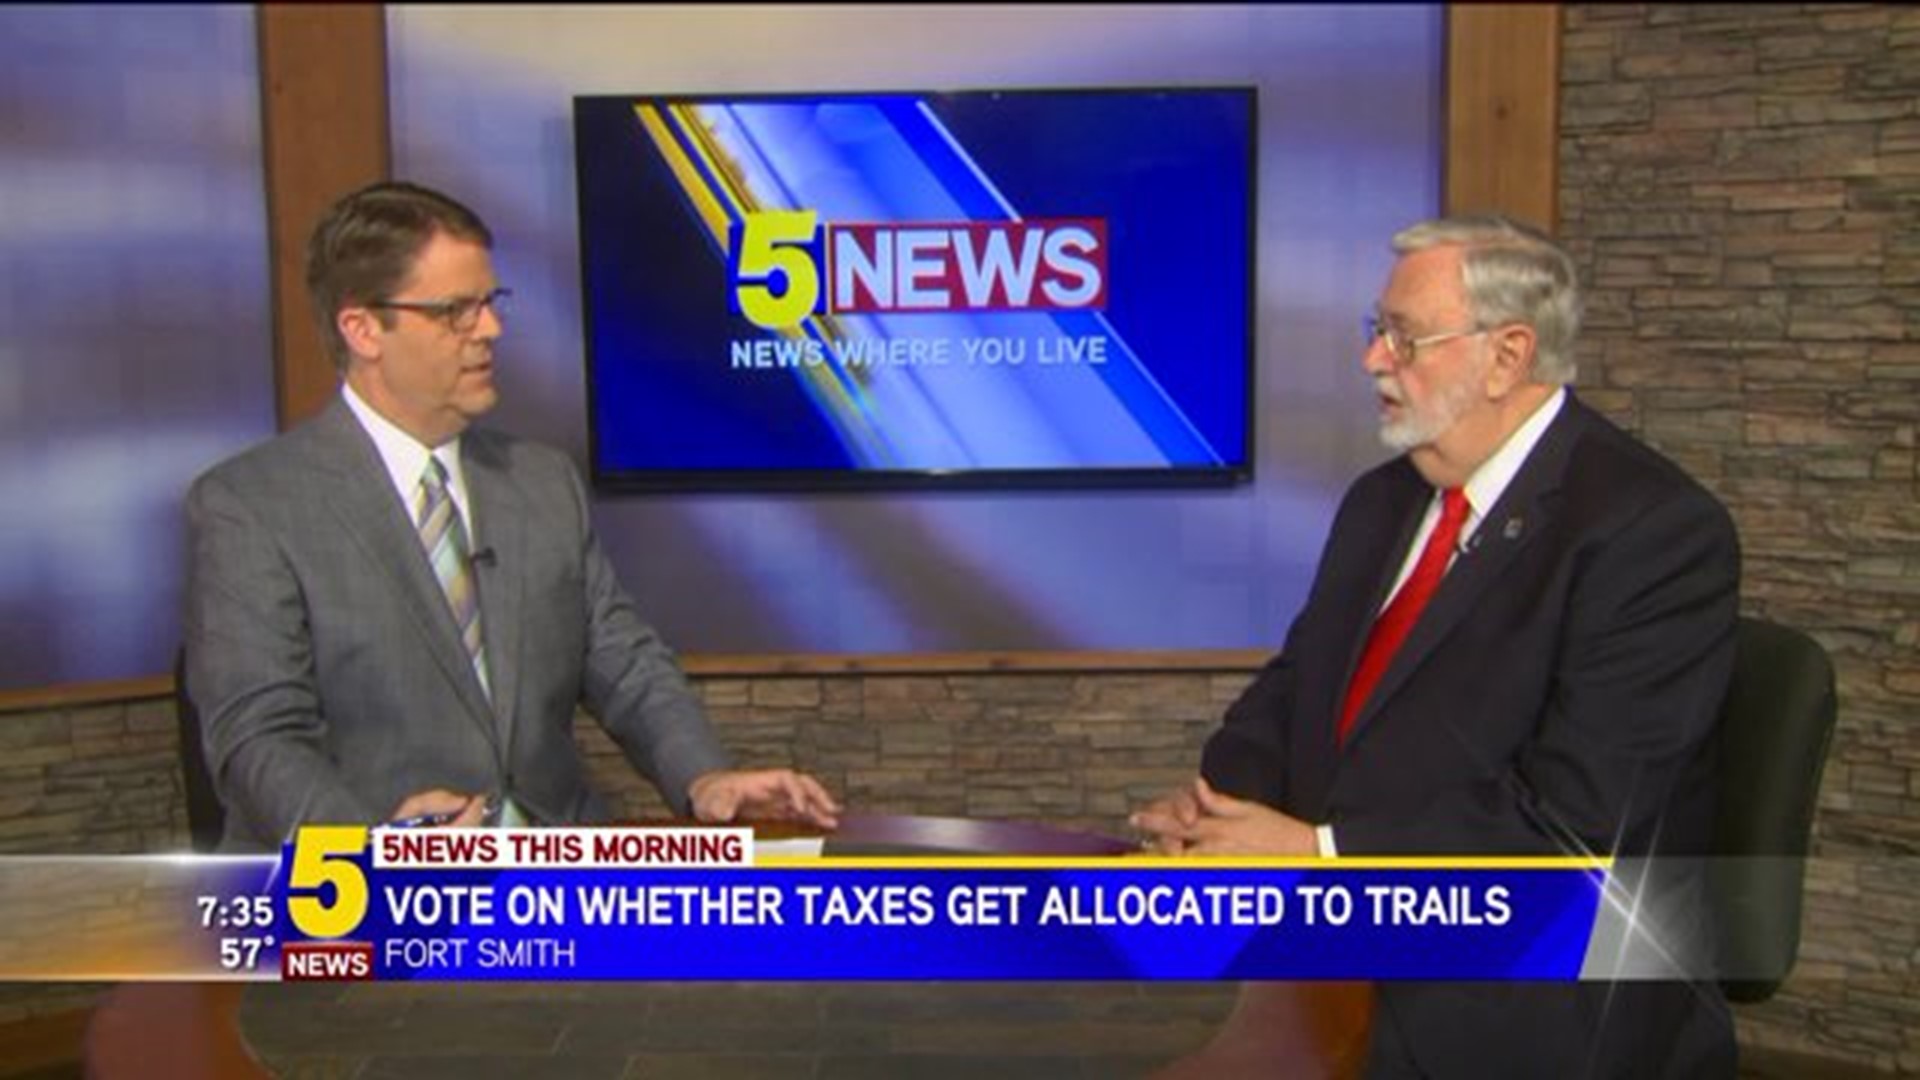 Fort Smith Mayor Speaks On Taxes